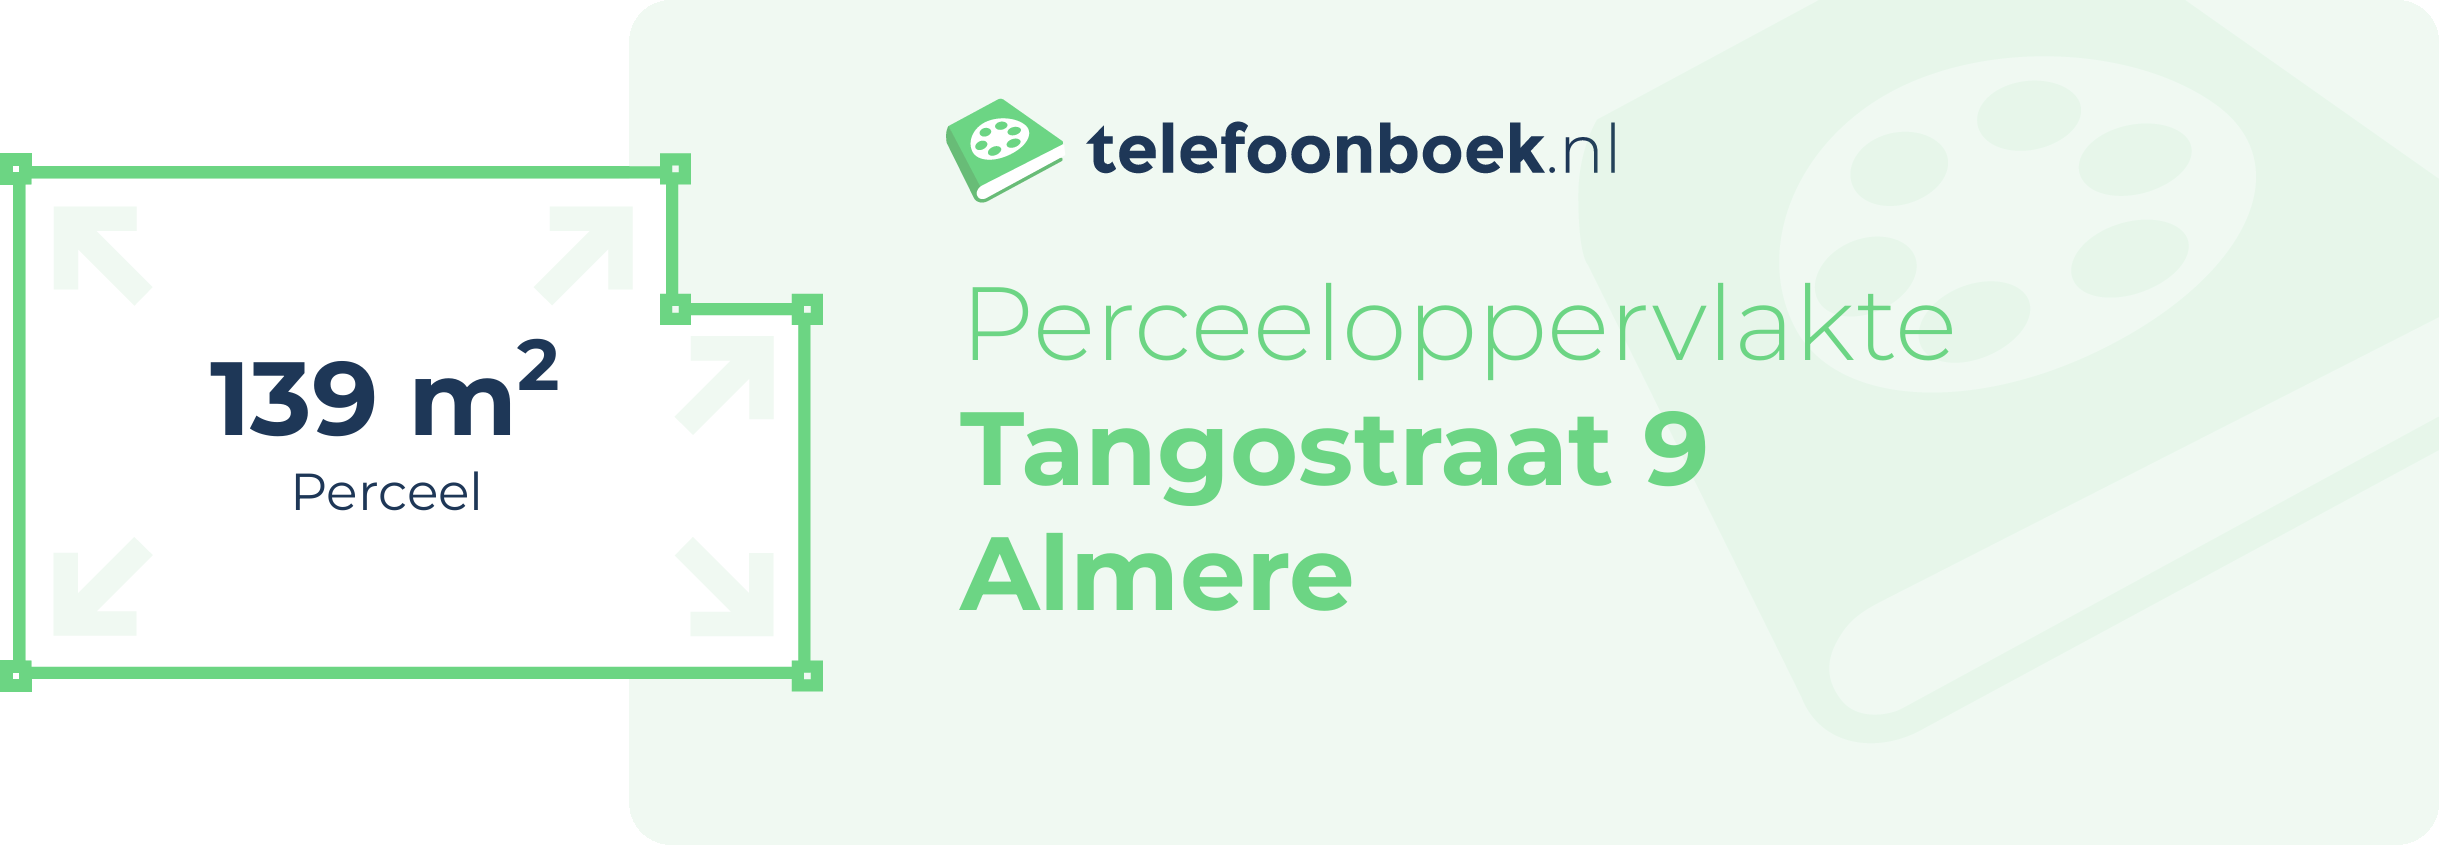 Perceeloppervlakte Tangostraat 9 Almere